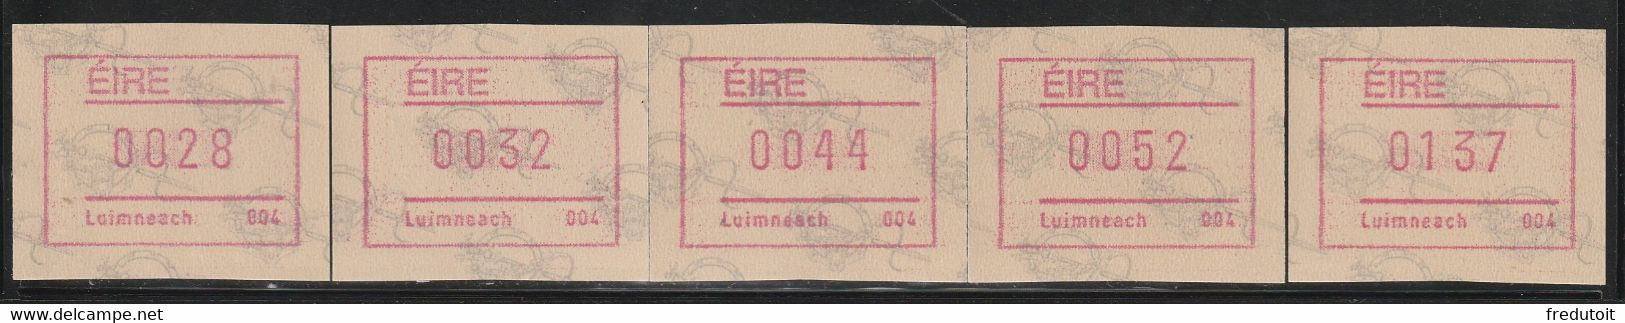 IRLANDE - Timbres Distributeurs / FRAMA  ATM - N°4** (1992) Luimneach 004 - Vignettes D'affranchissement (Frama)